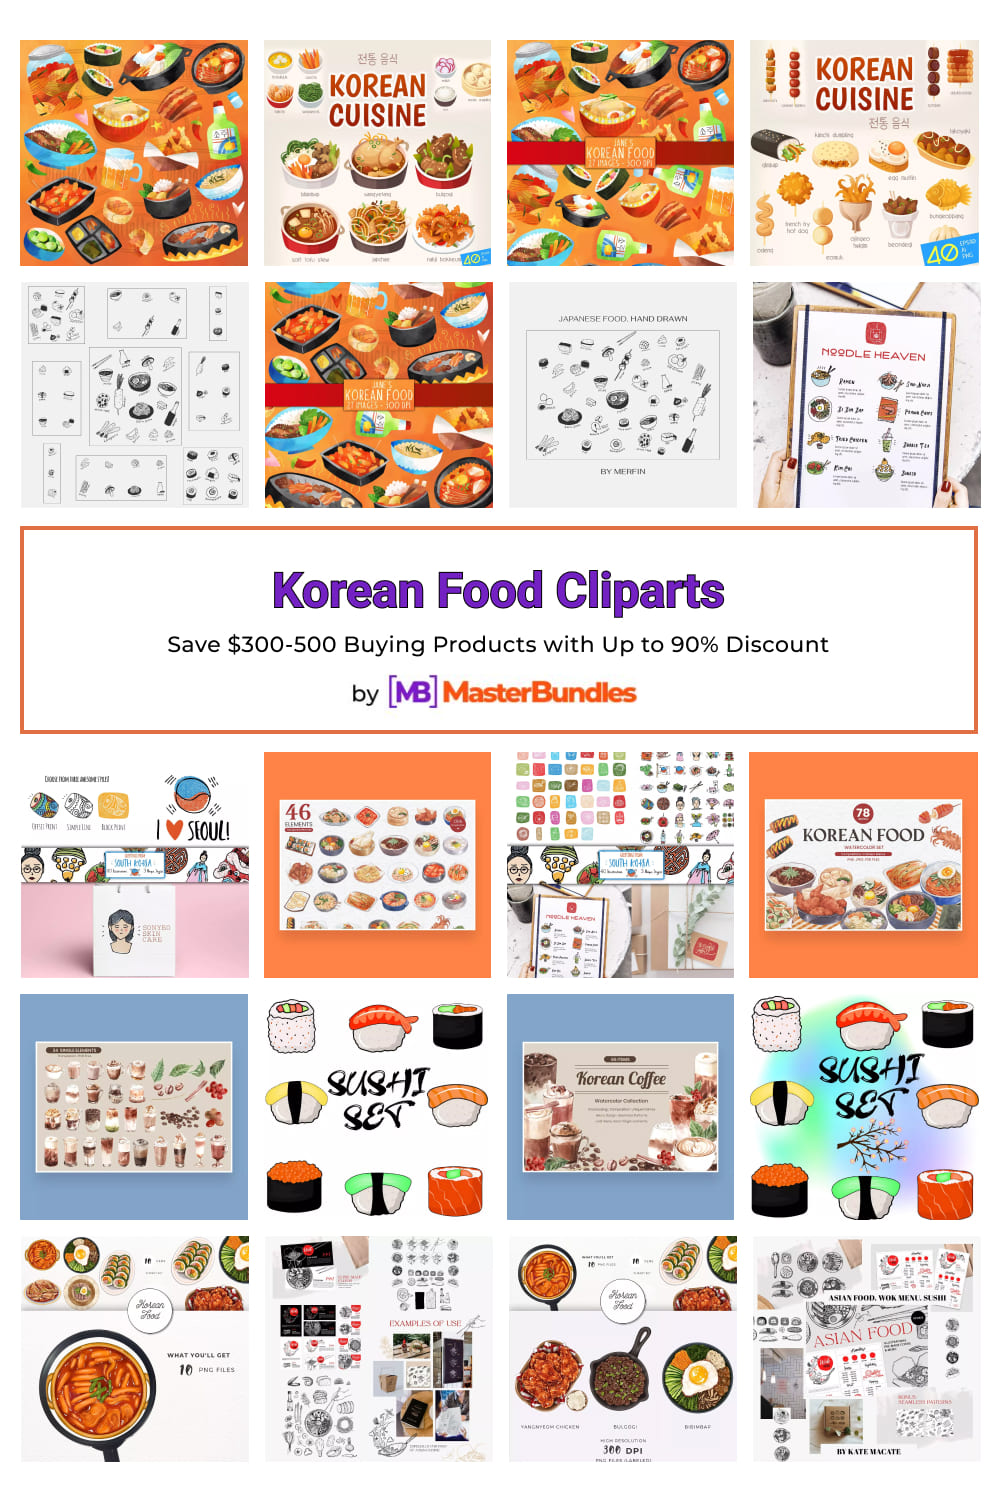 Korean Food Cliparts for Pinterest.